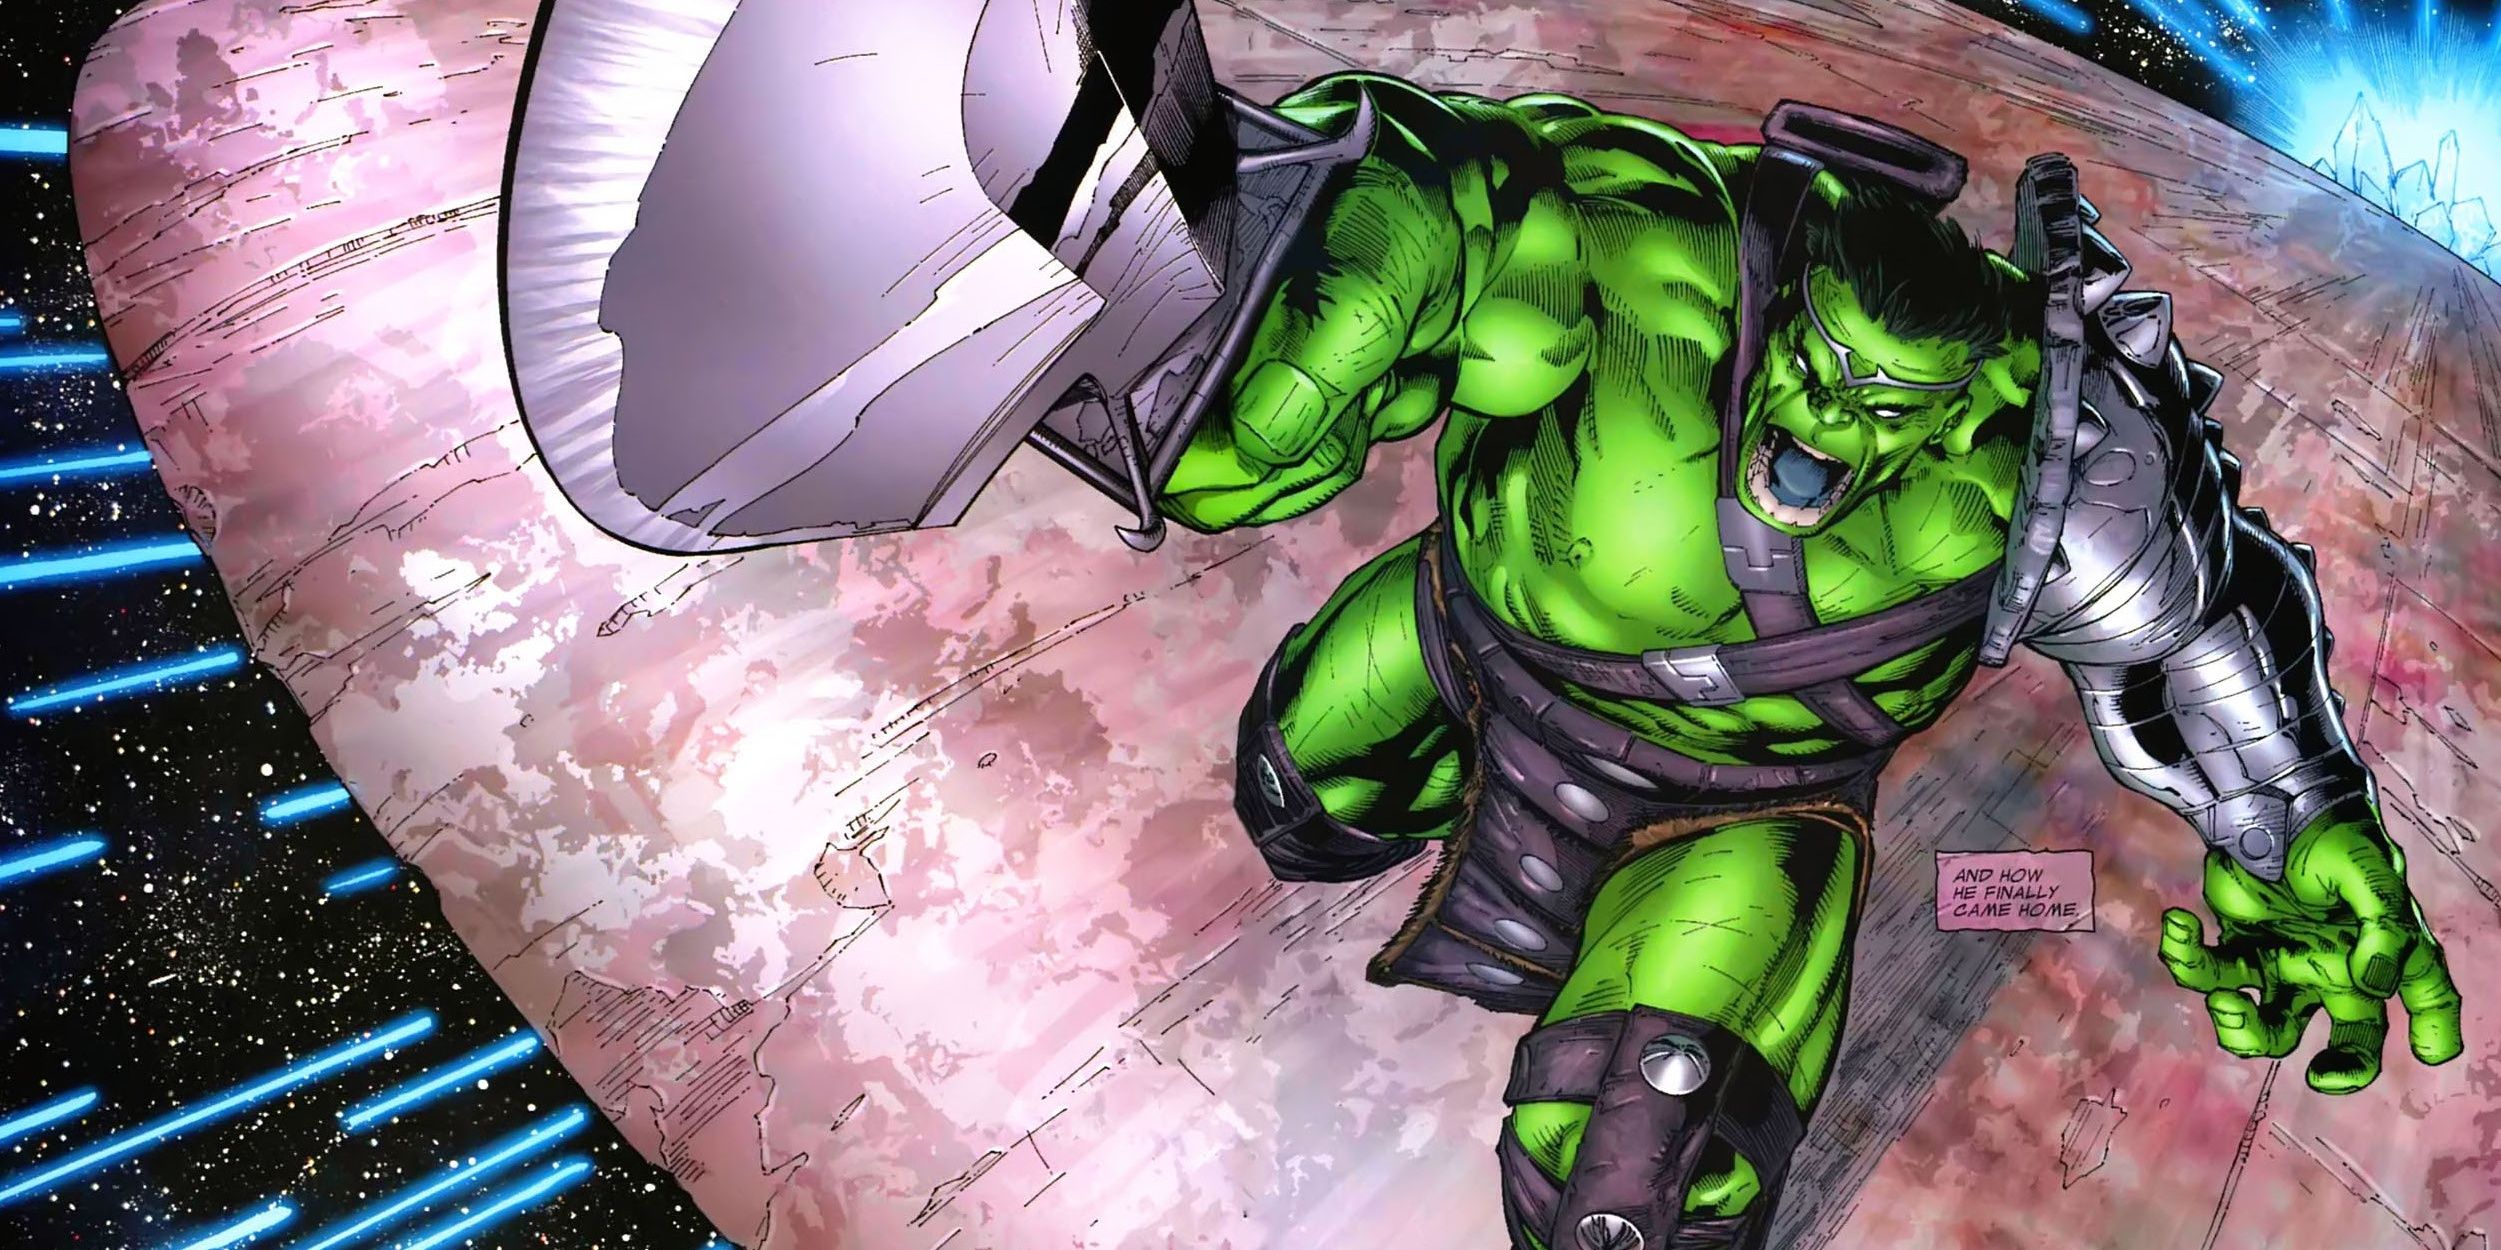 Hulk jumps above Planet Sakaar in Marvel comics